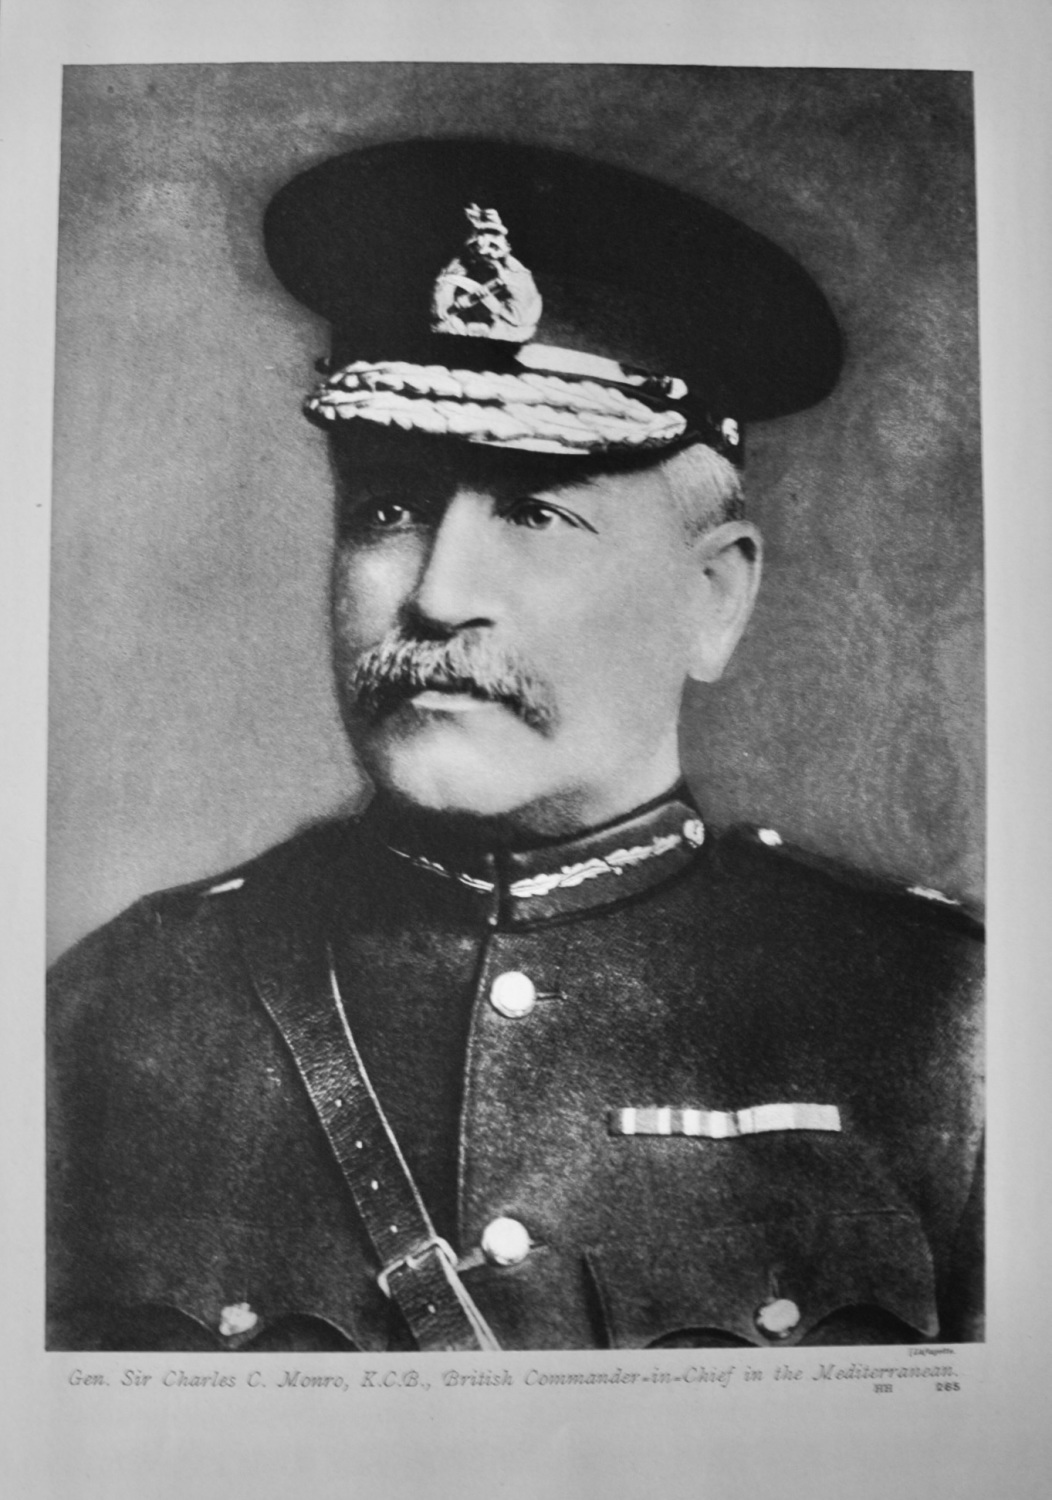 Gen. Sir Charles C. Monro, K.C.B., British Commander-in-Chief in the Medite